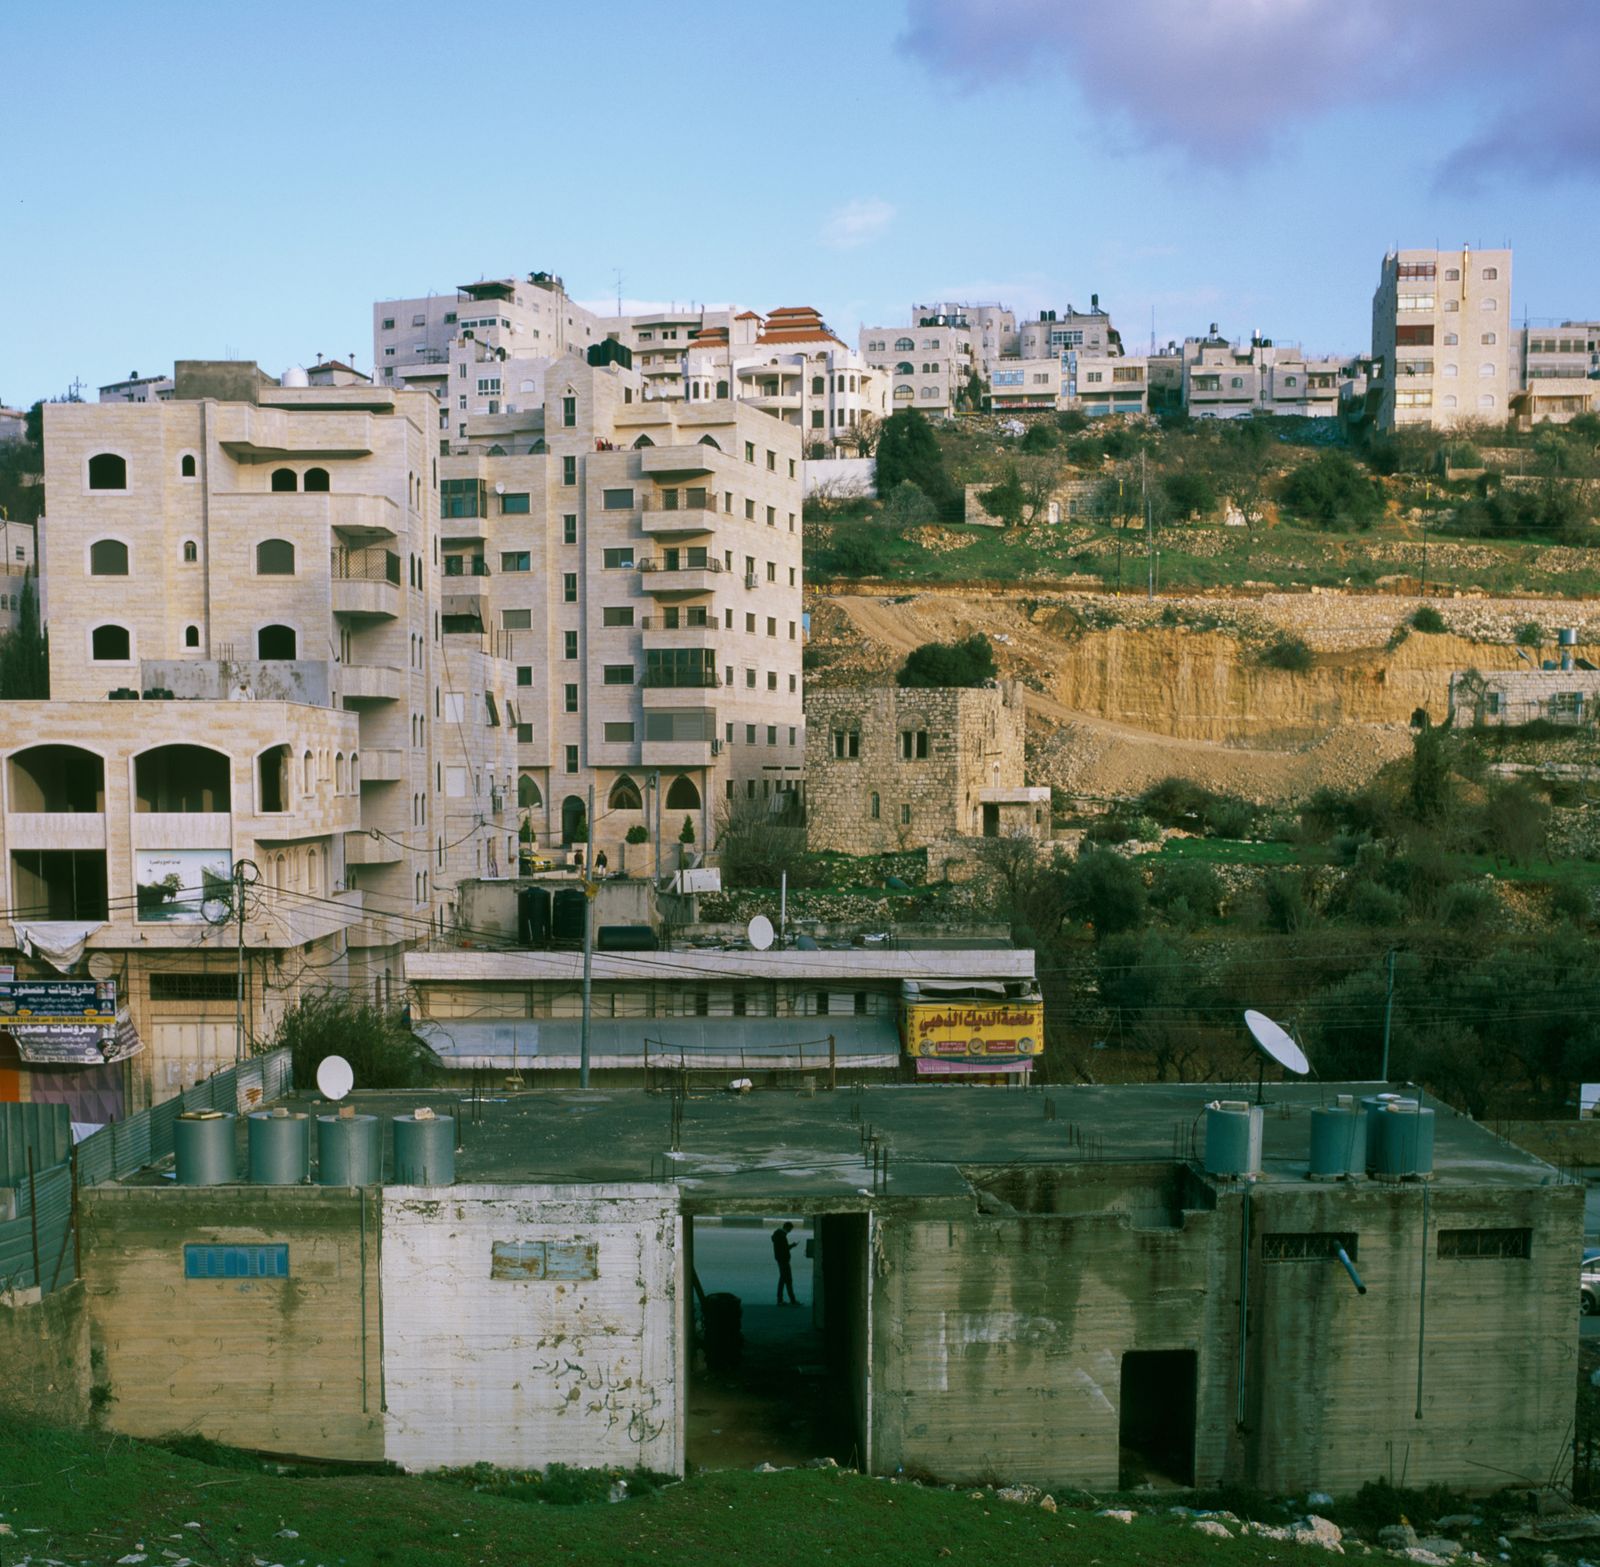 © Federico Busonero - The city of Hebron showing the unregulated urban development